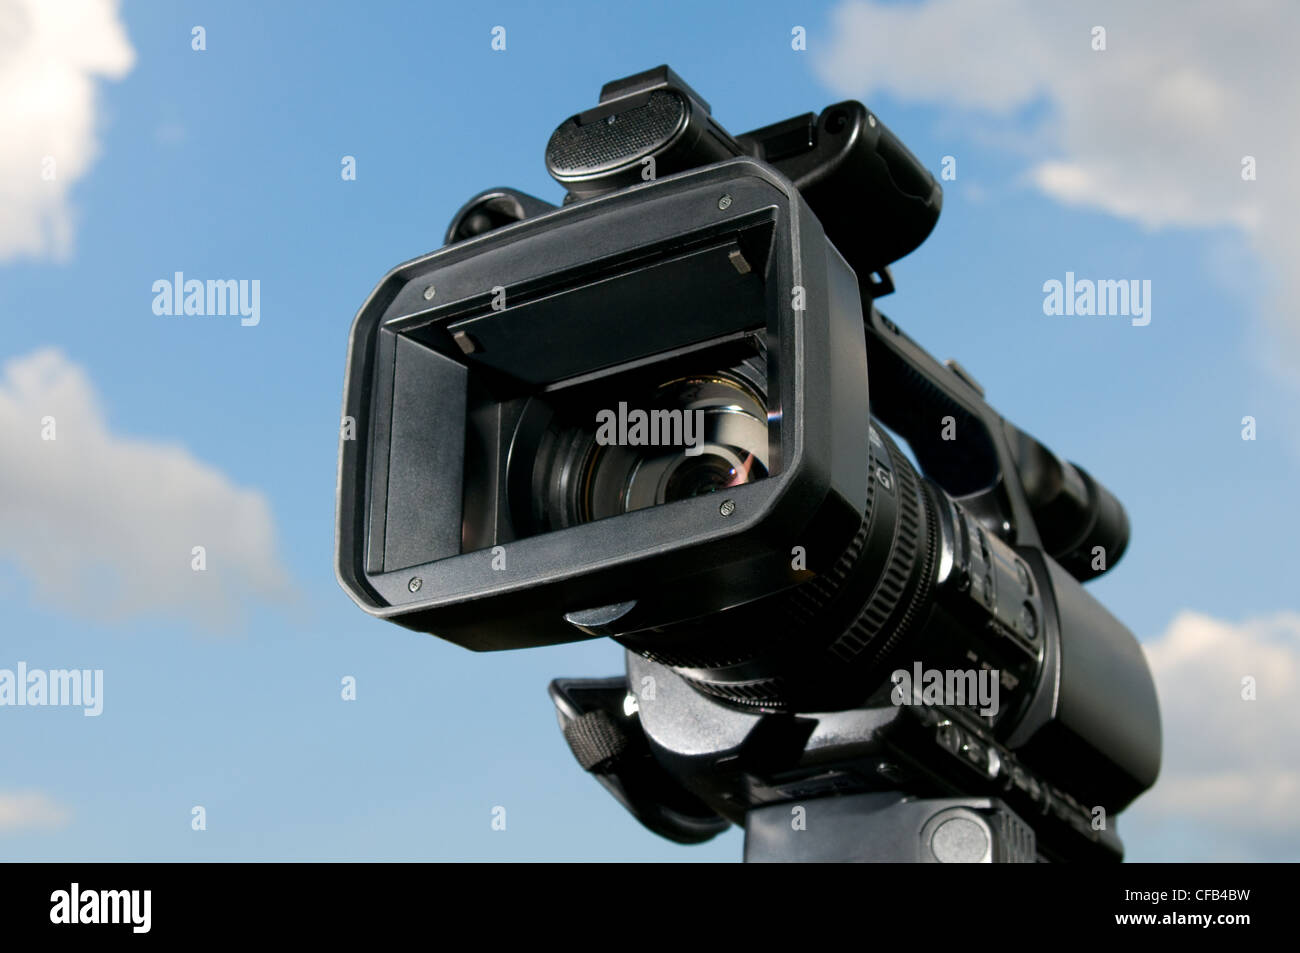 Professional video camera, sky background. Stock Photo